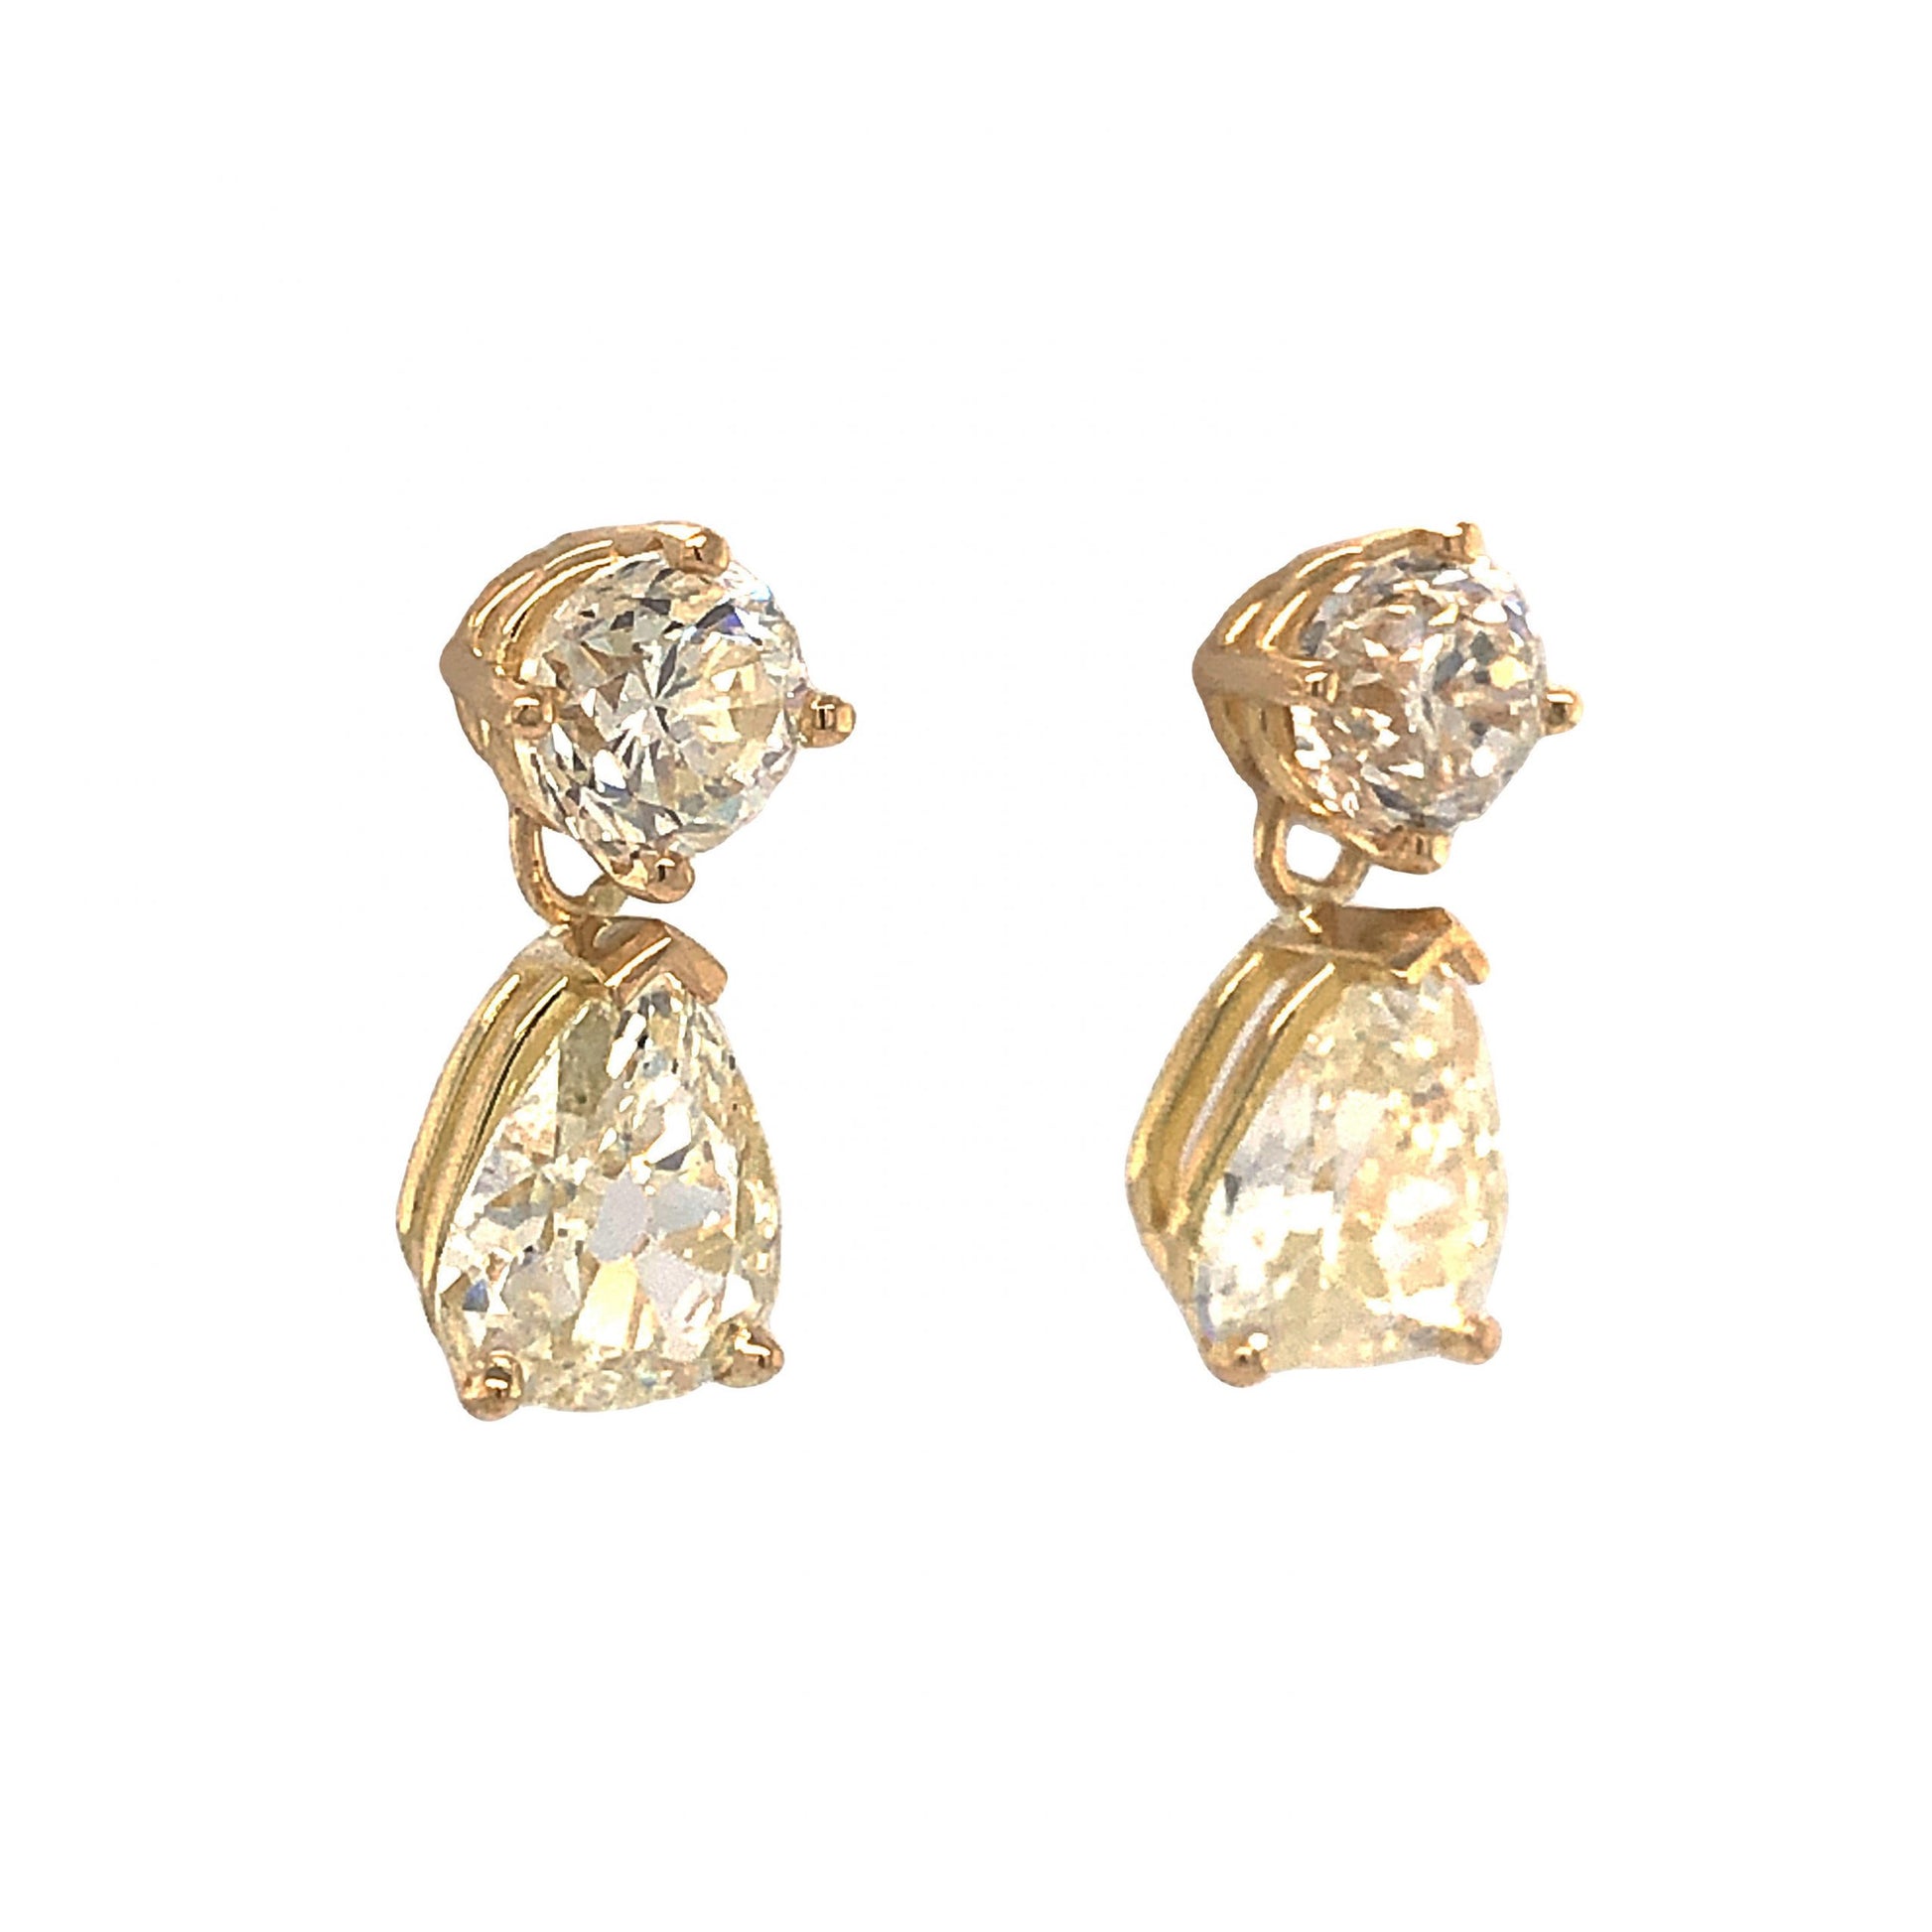 Fancy Yellow Pear Cut Diamond Earrings in 18k Yellow GoldComposition: 18 Karat Yellow GoldTotal Diamond Weight: 4.51 ctTotal Gram Weight: 3.9 gInscription: 18k